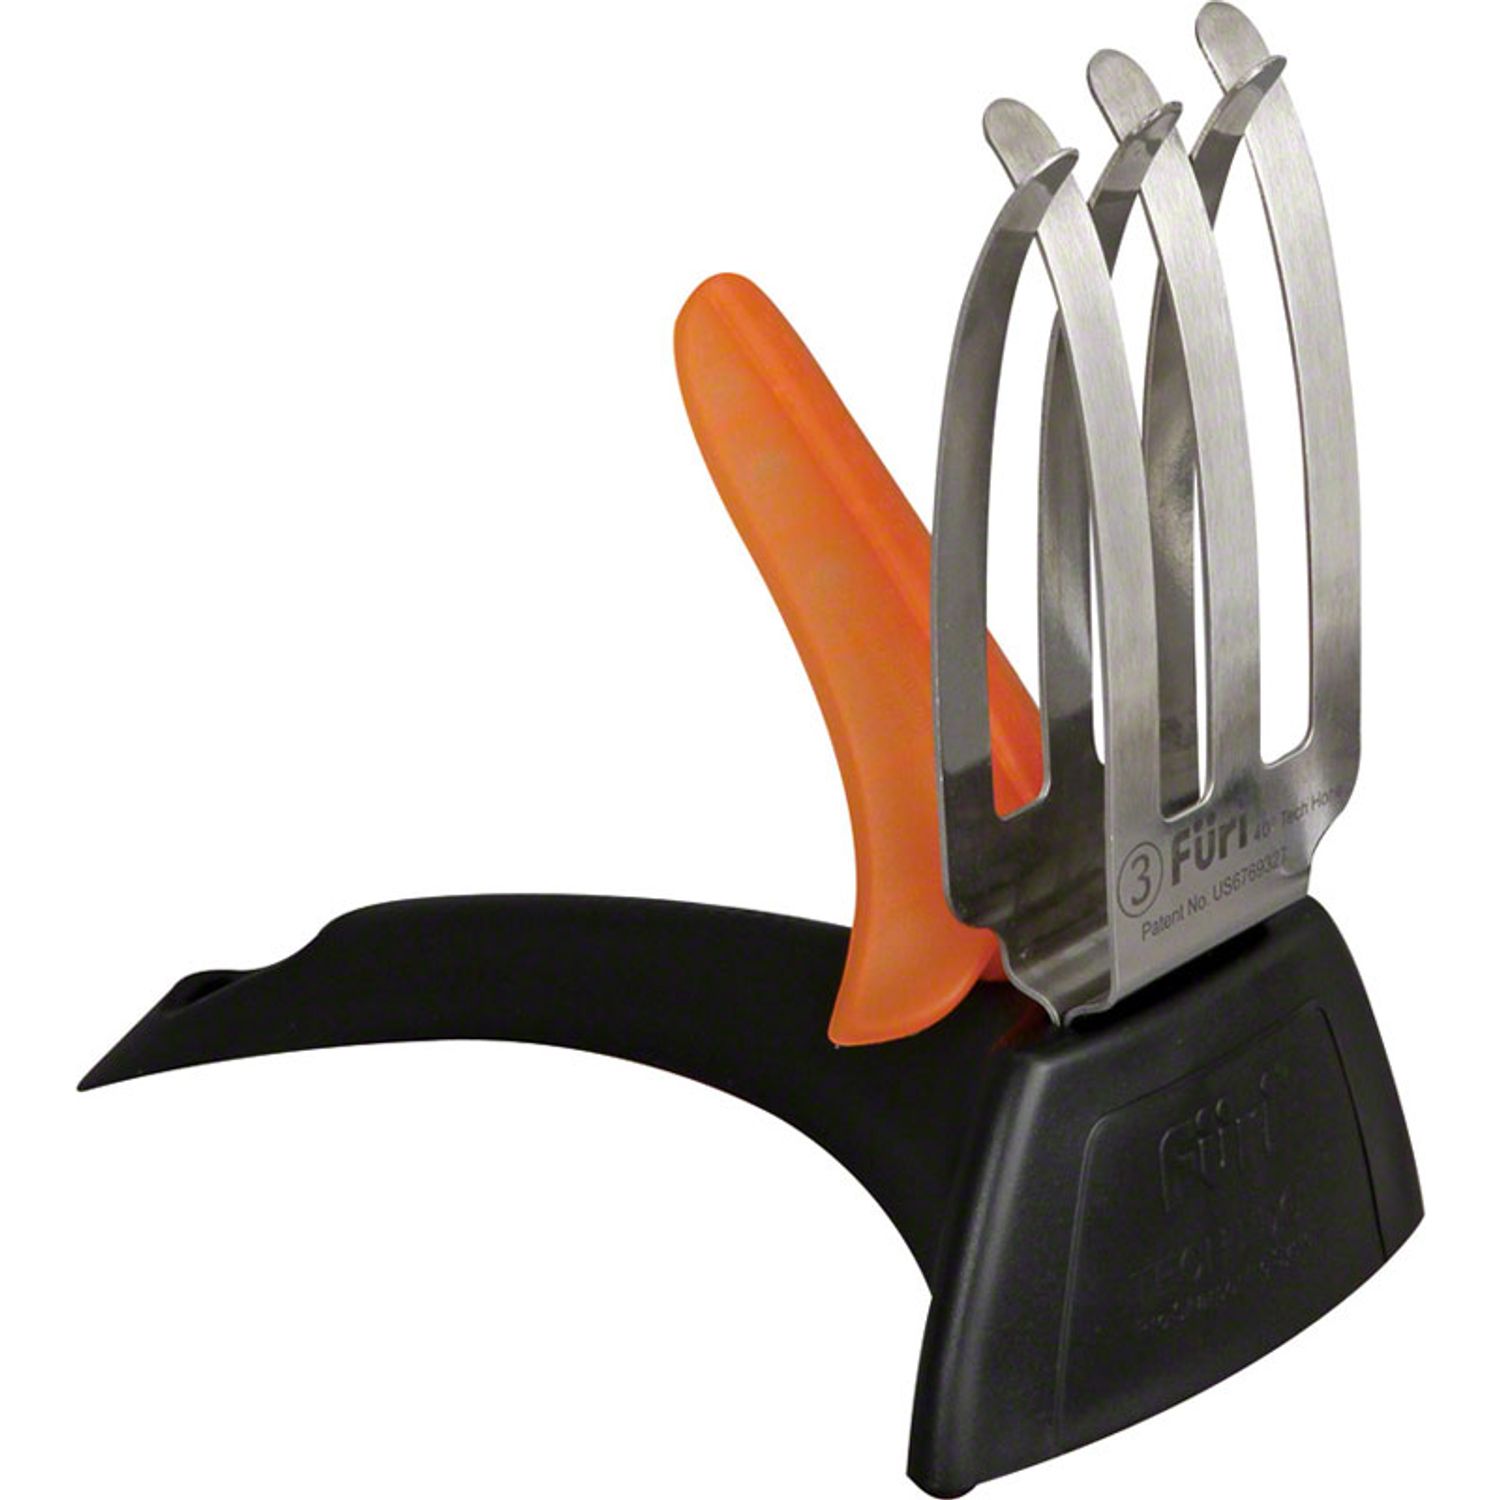 Furi Rachael Ray Tech Edge Diamond Knife Sharpener - KnifeCenter - FUR629 -  Discontinued